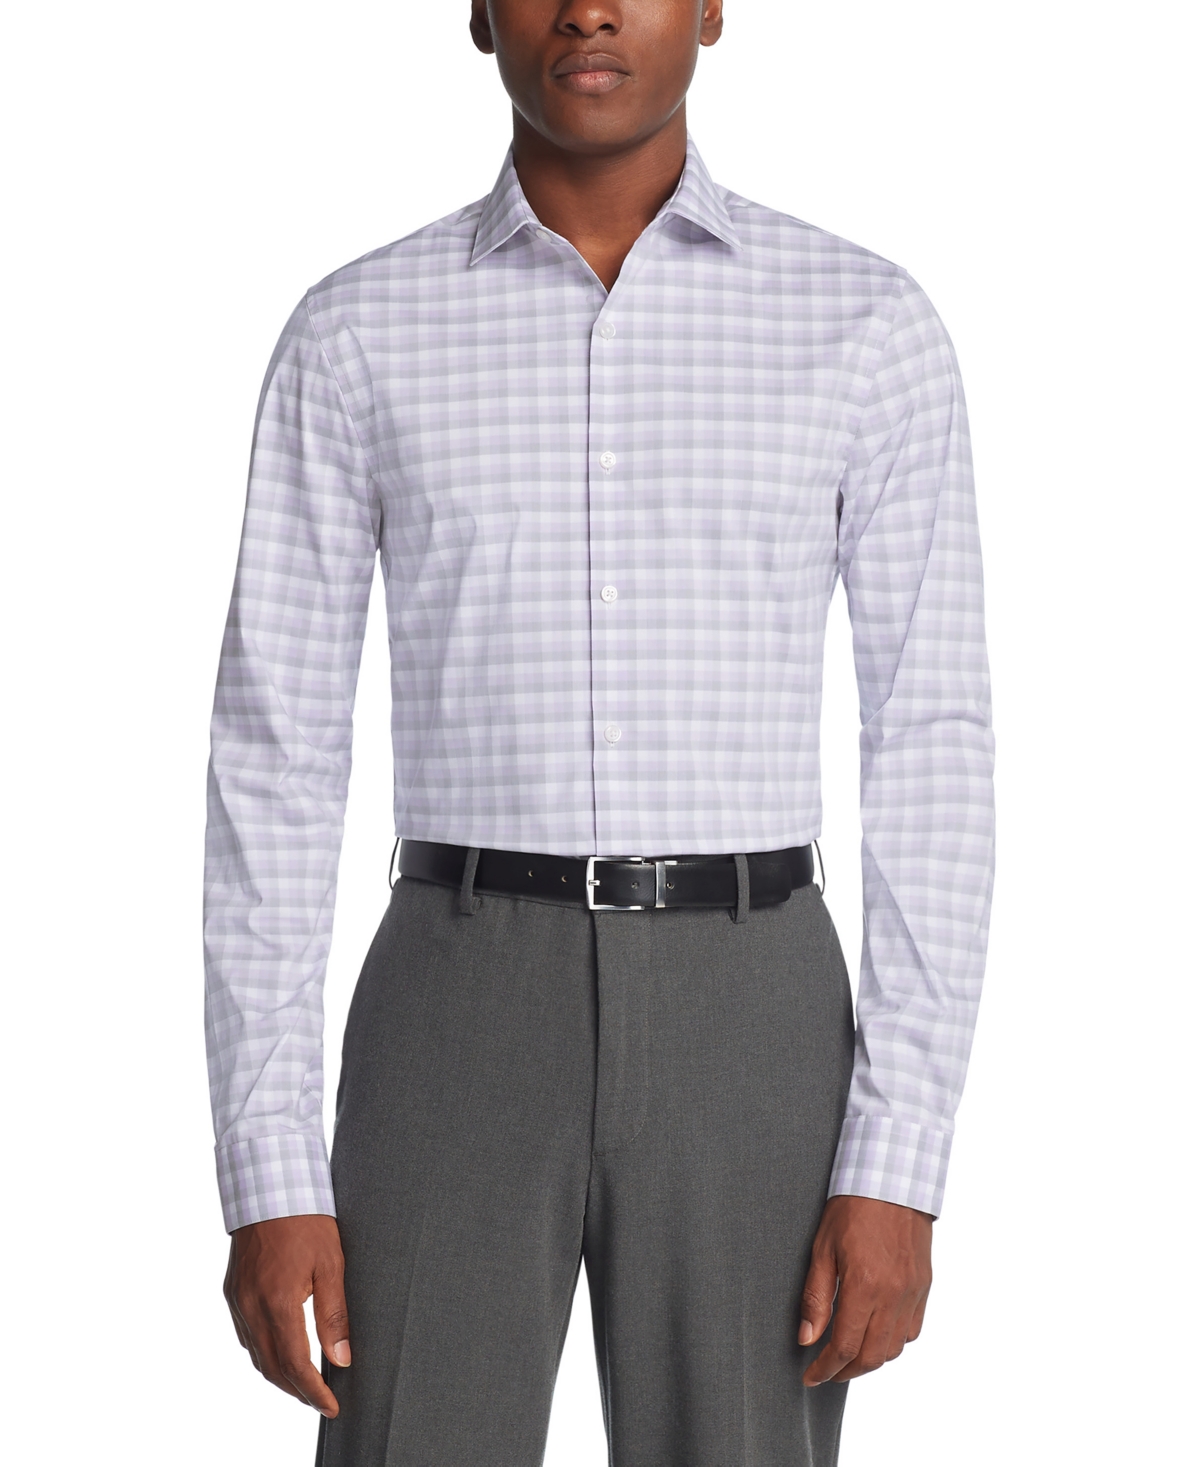 Men's Slim-Fit Flex Stretch Dress Shirt - Amethyst